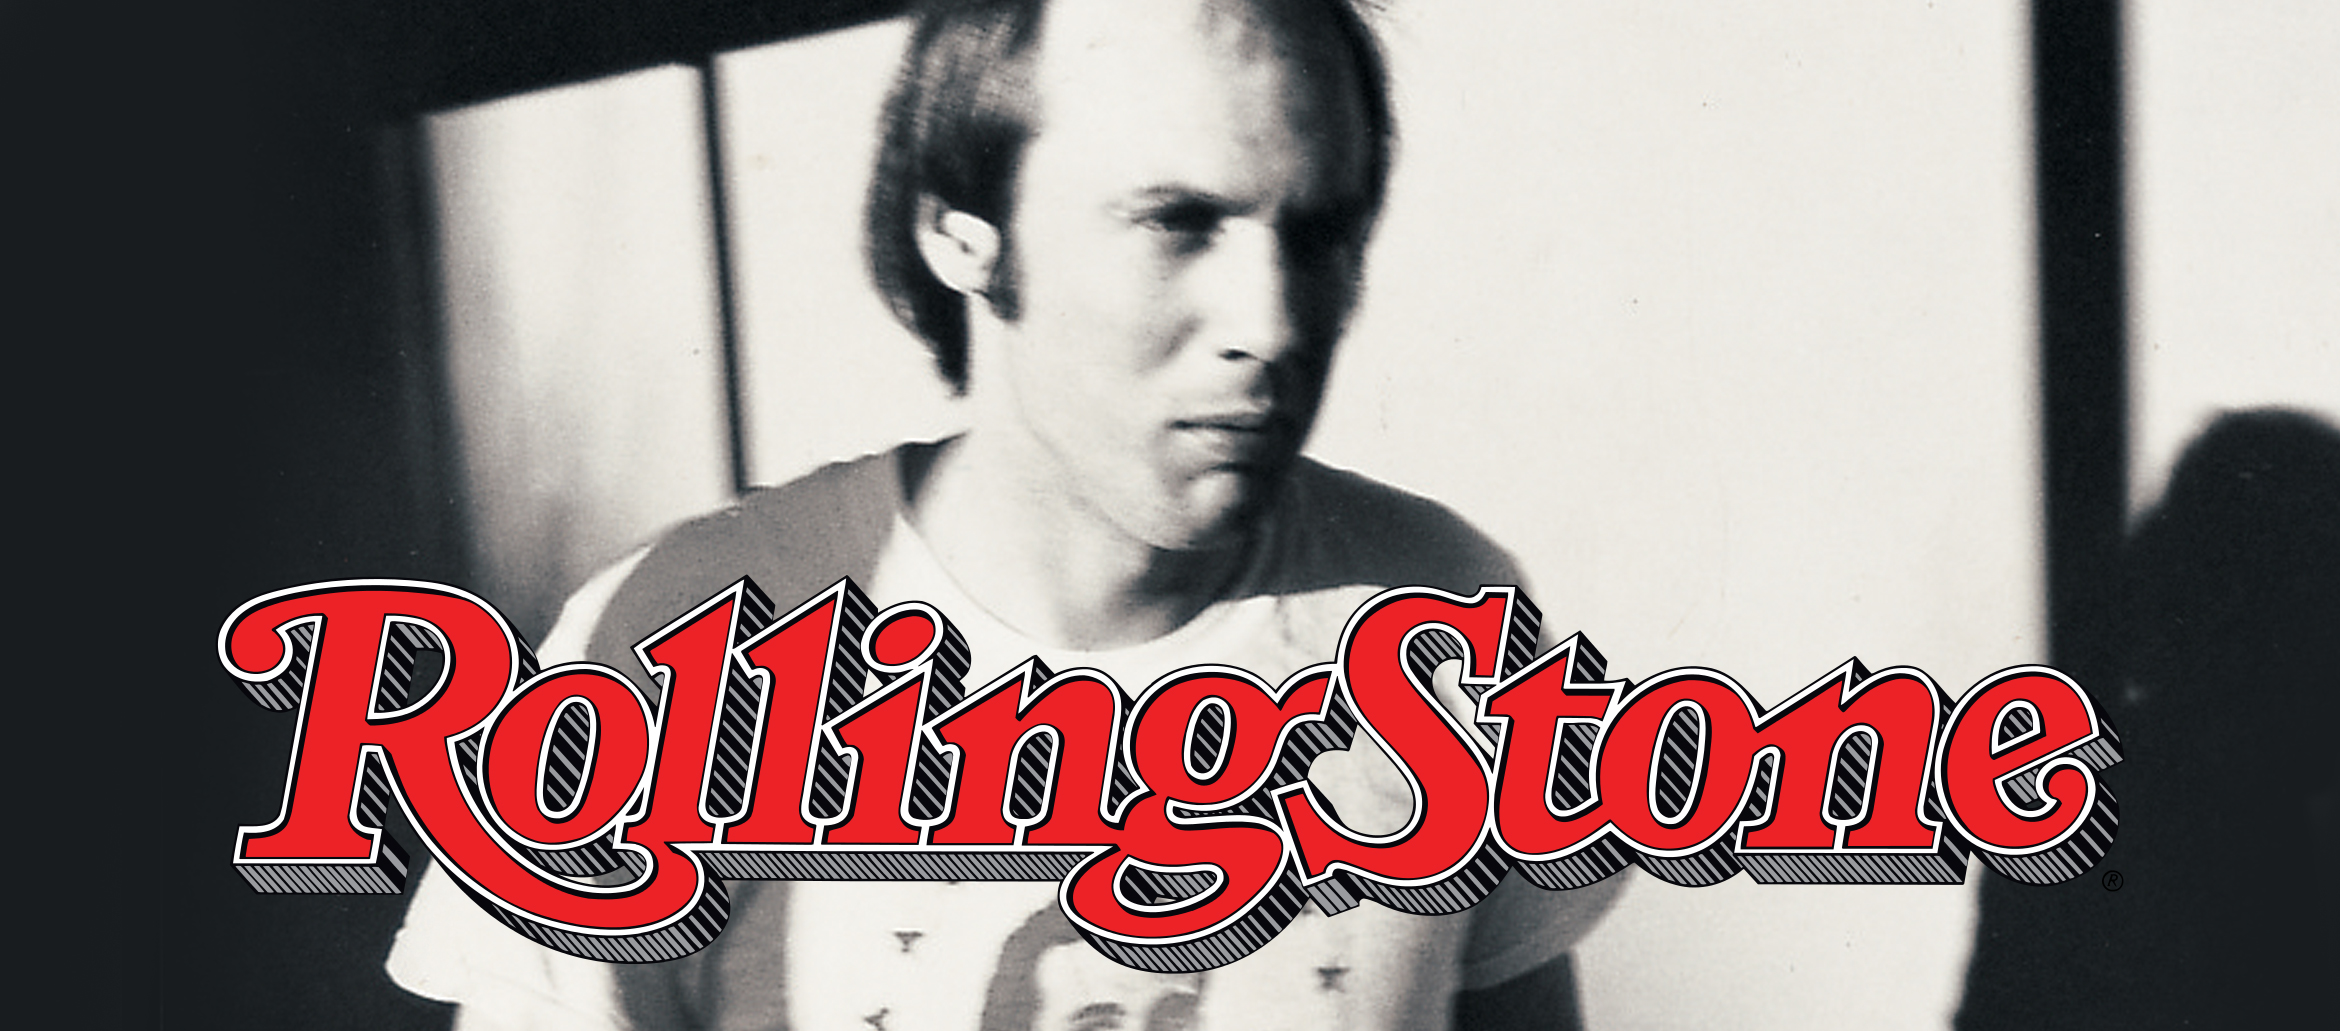 Ron Nagle Rolling Stone News Item